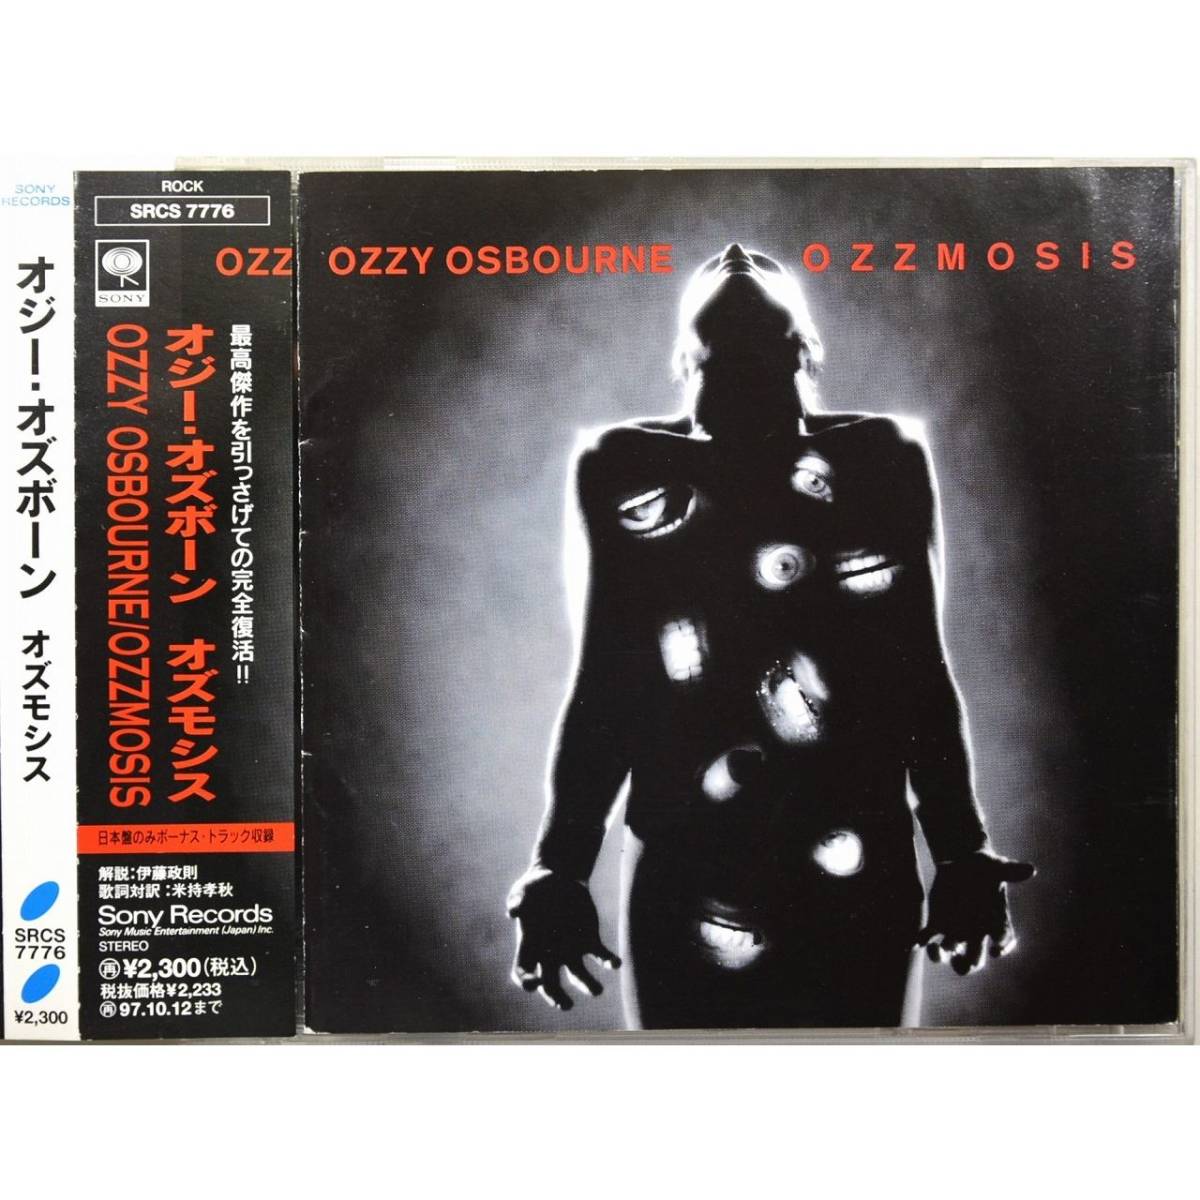 Ozzy Osbourne / Ozzmosis ◇ オジー・オズボーン / オズモシス ◇ ザック・ワイルド / ギーザー・バトラー ◇ 国内盤帯付 ◇_画像1